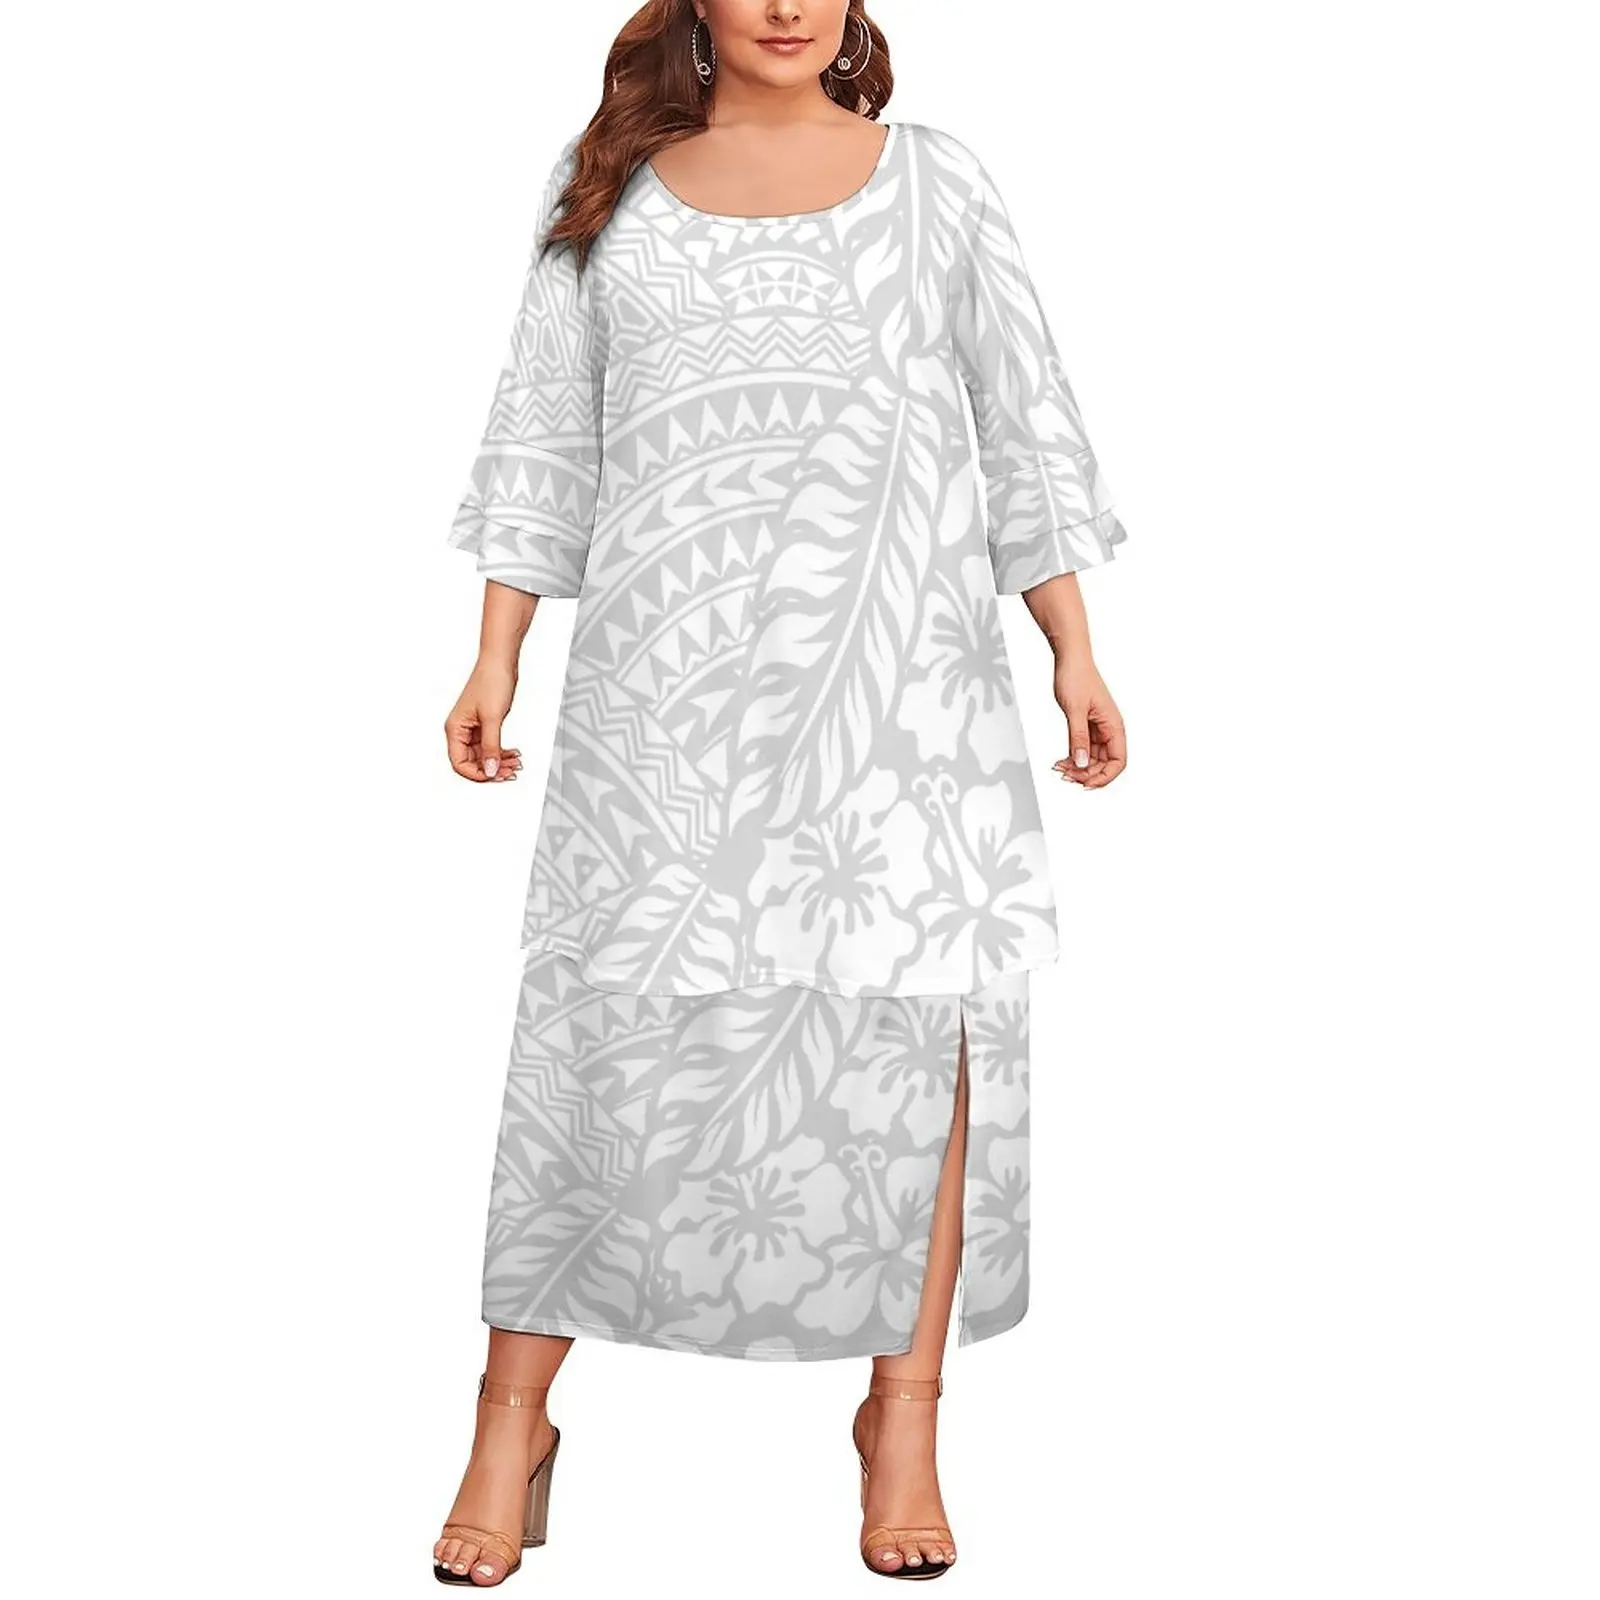 top quality polyester cotton polynesian women clothing plus size dress sets custom puletasi samoan white sunday party dresses